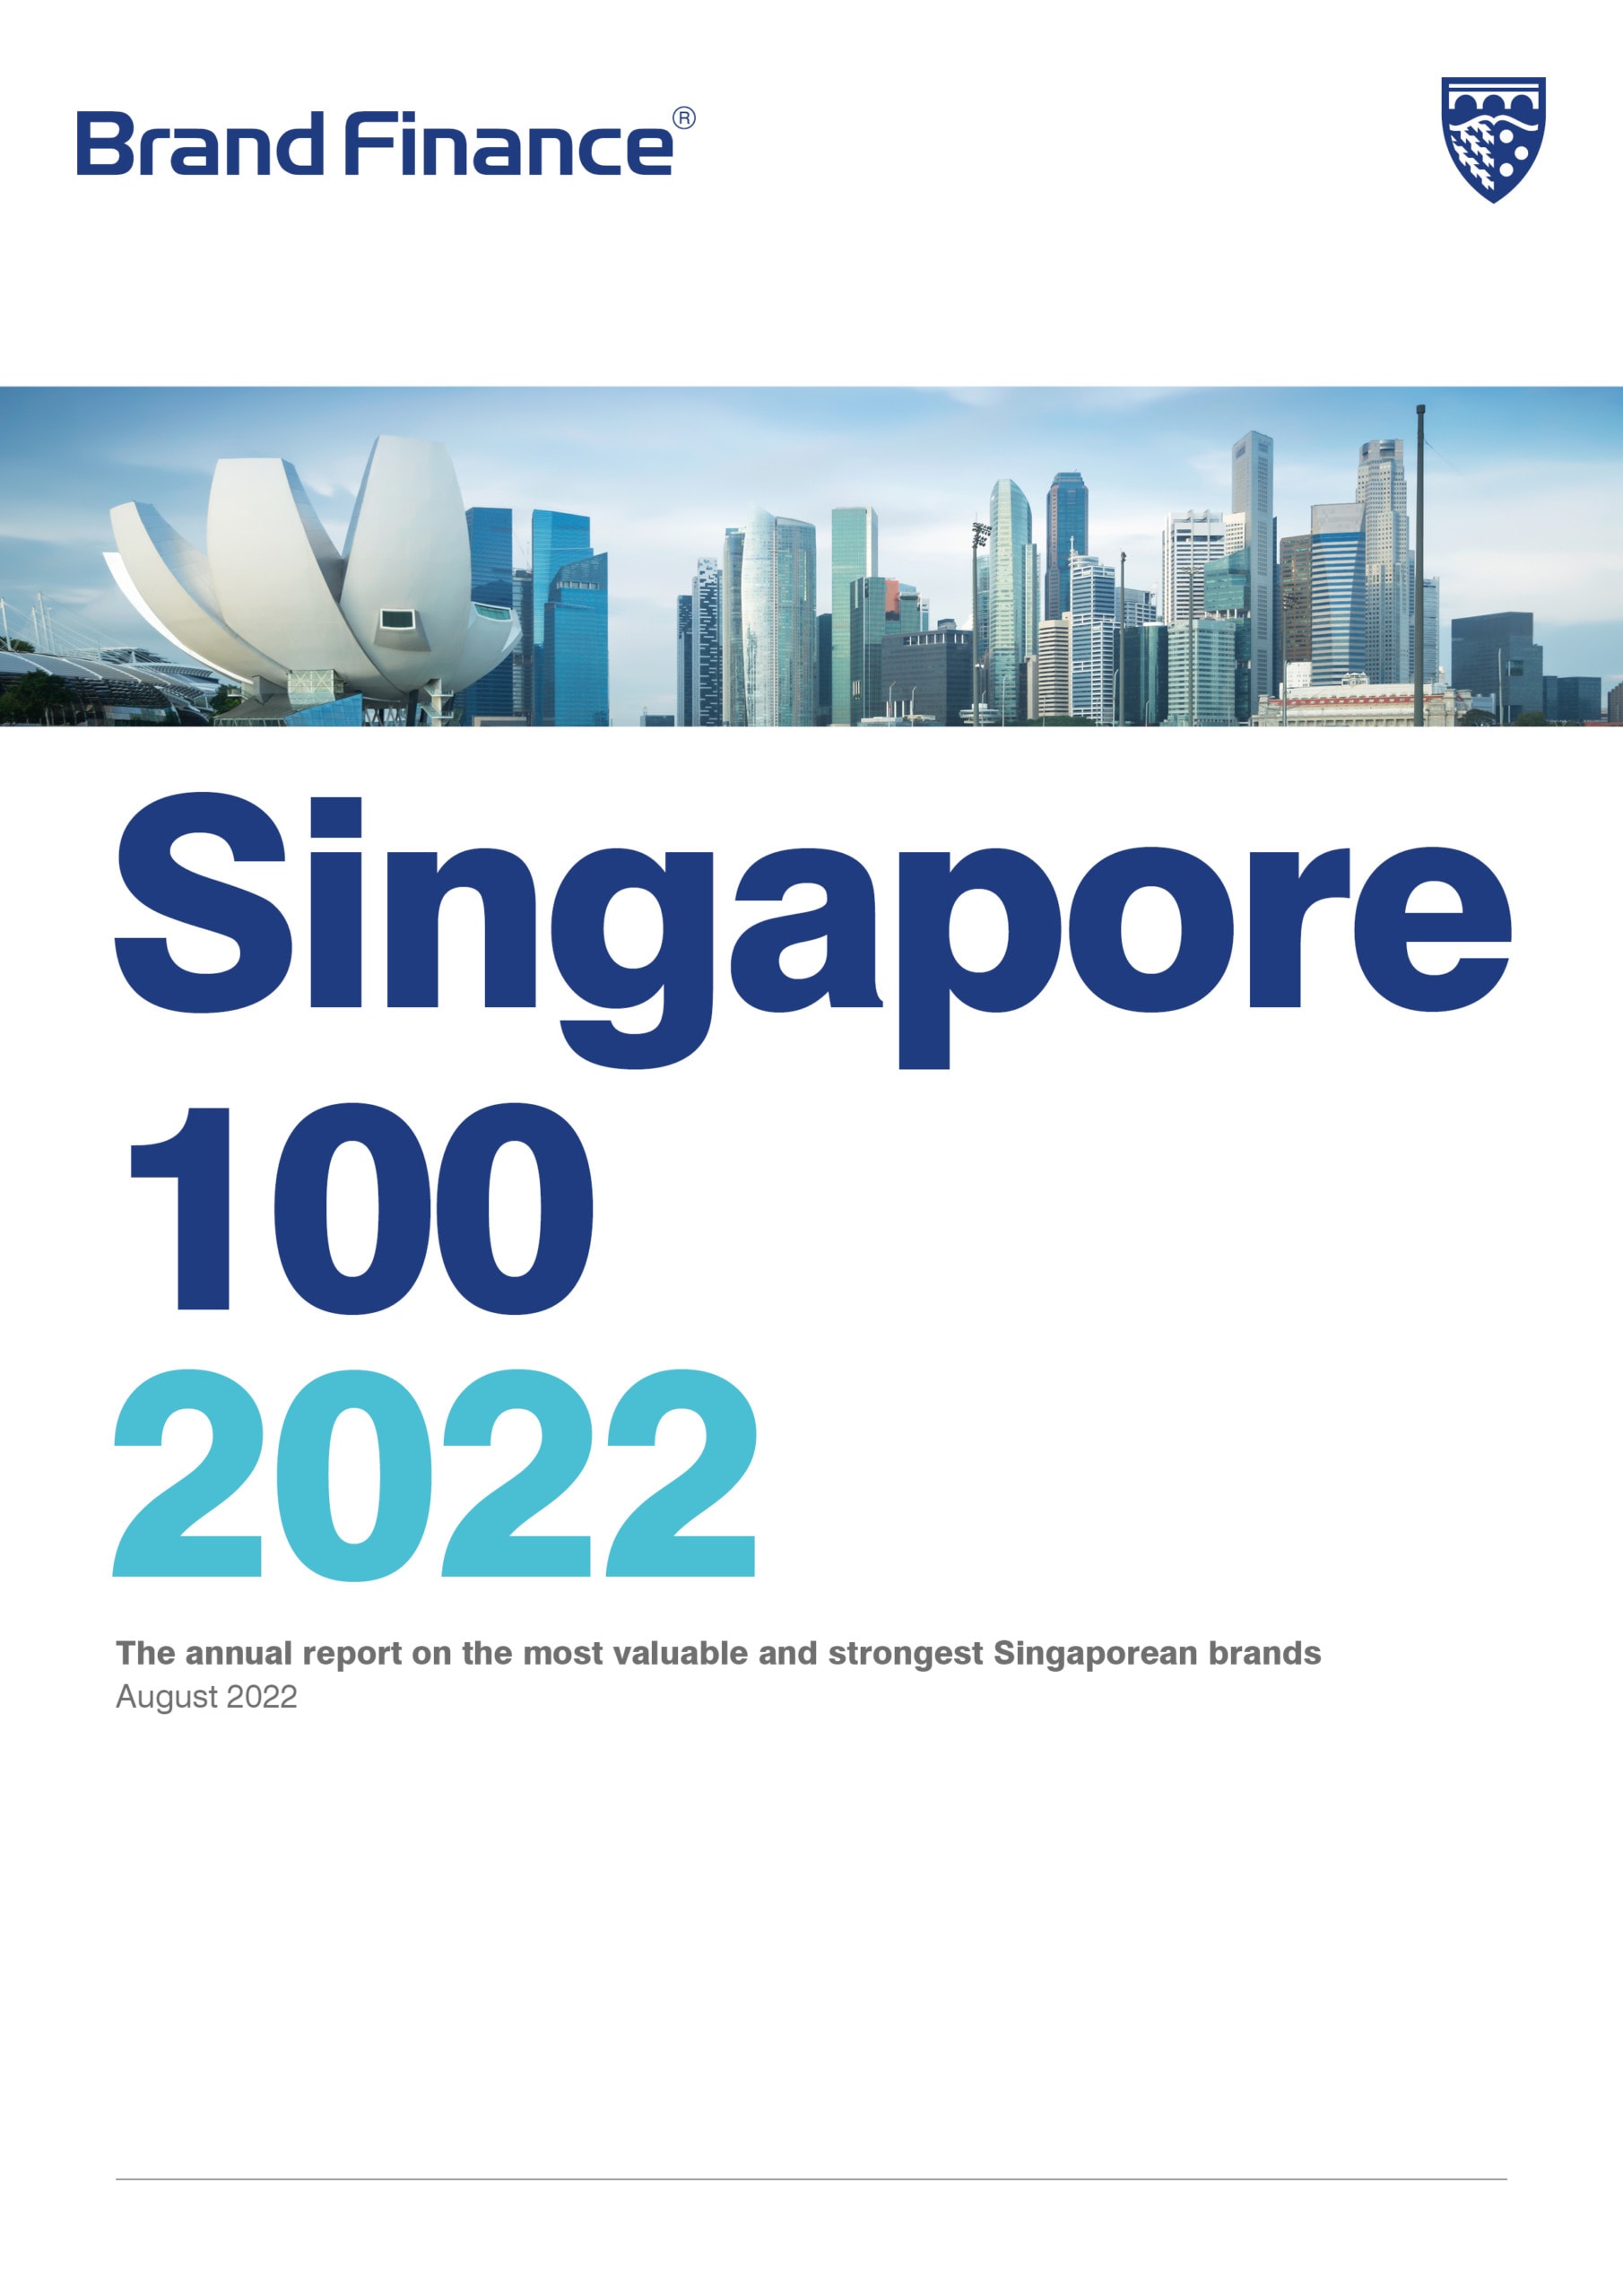 Brand Finance Singapore 100 2021